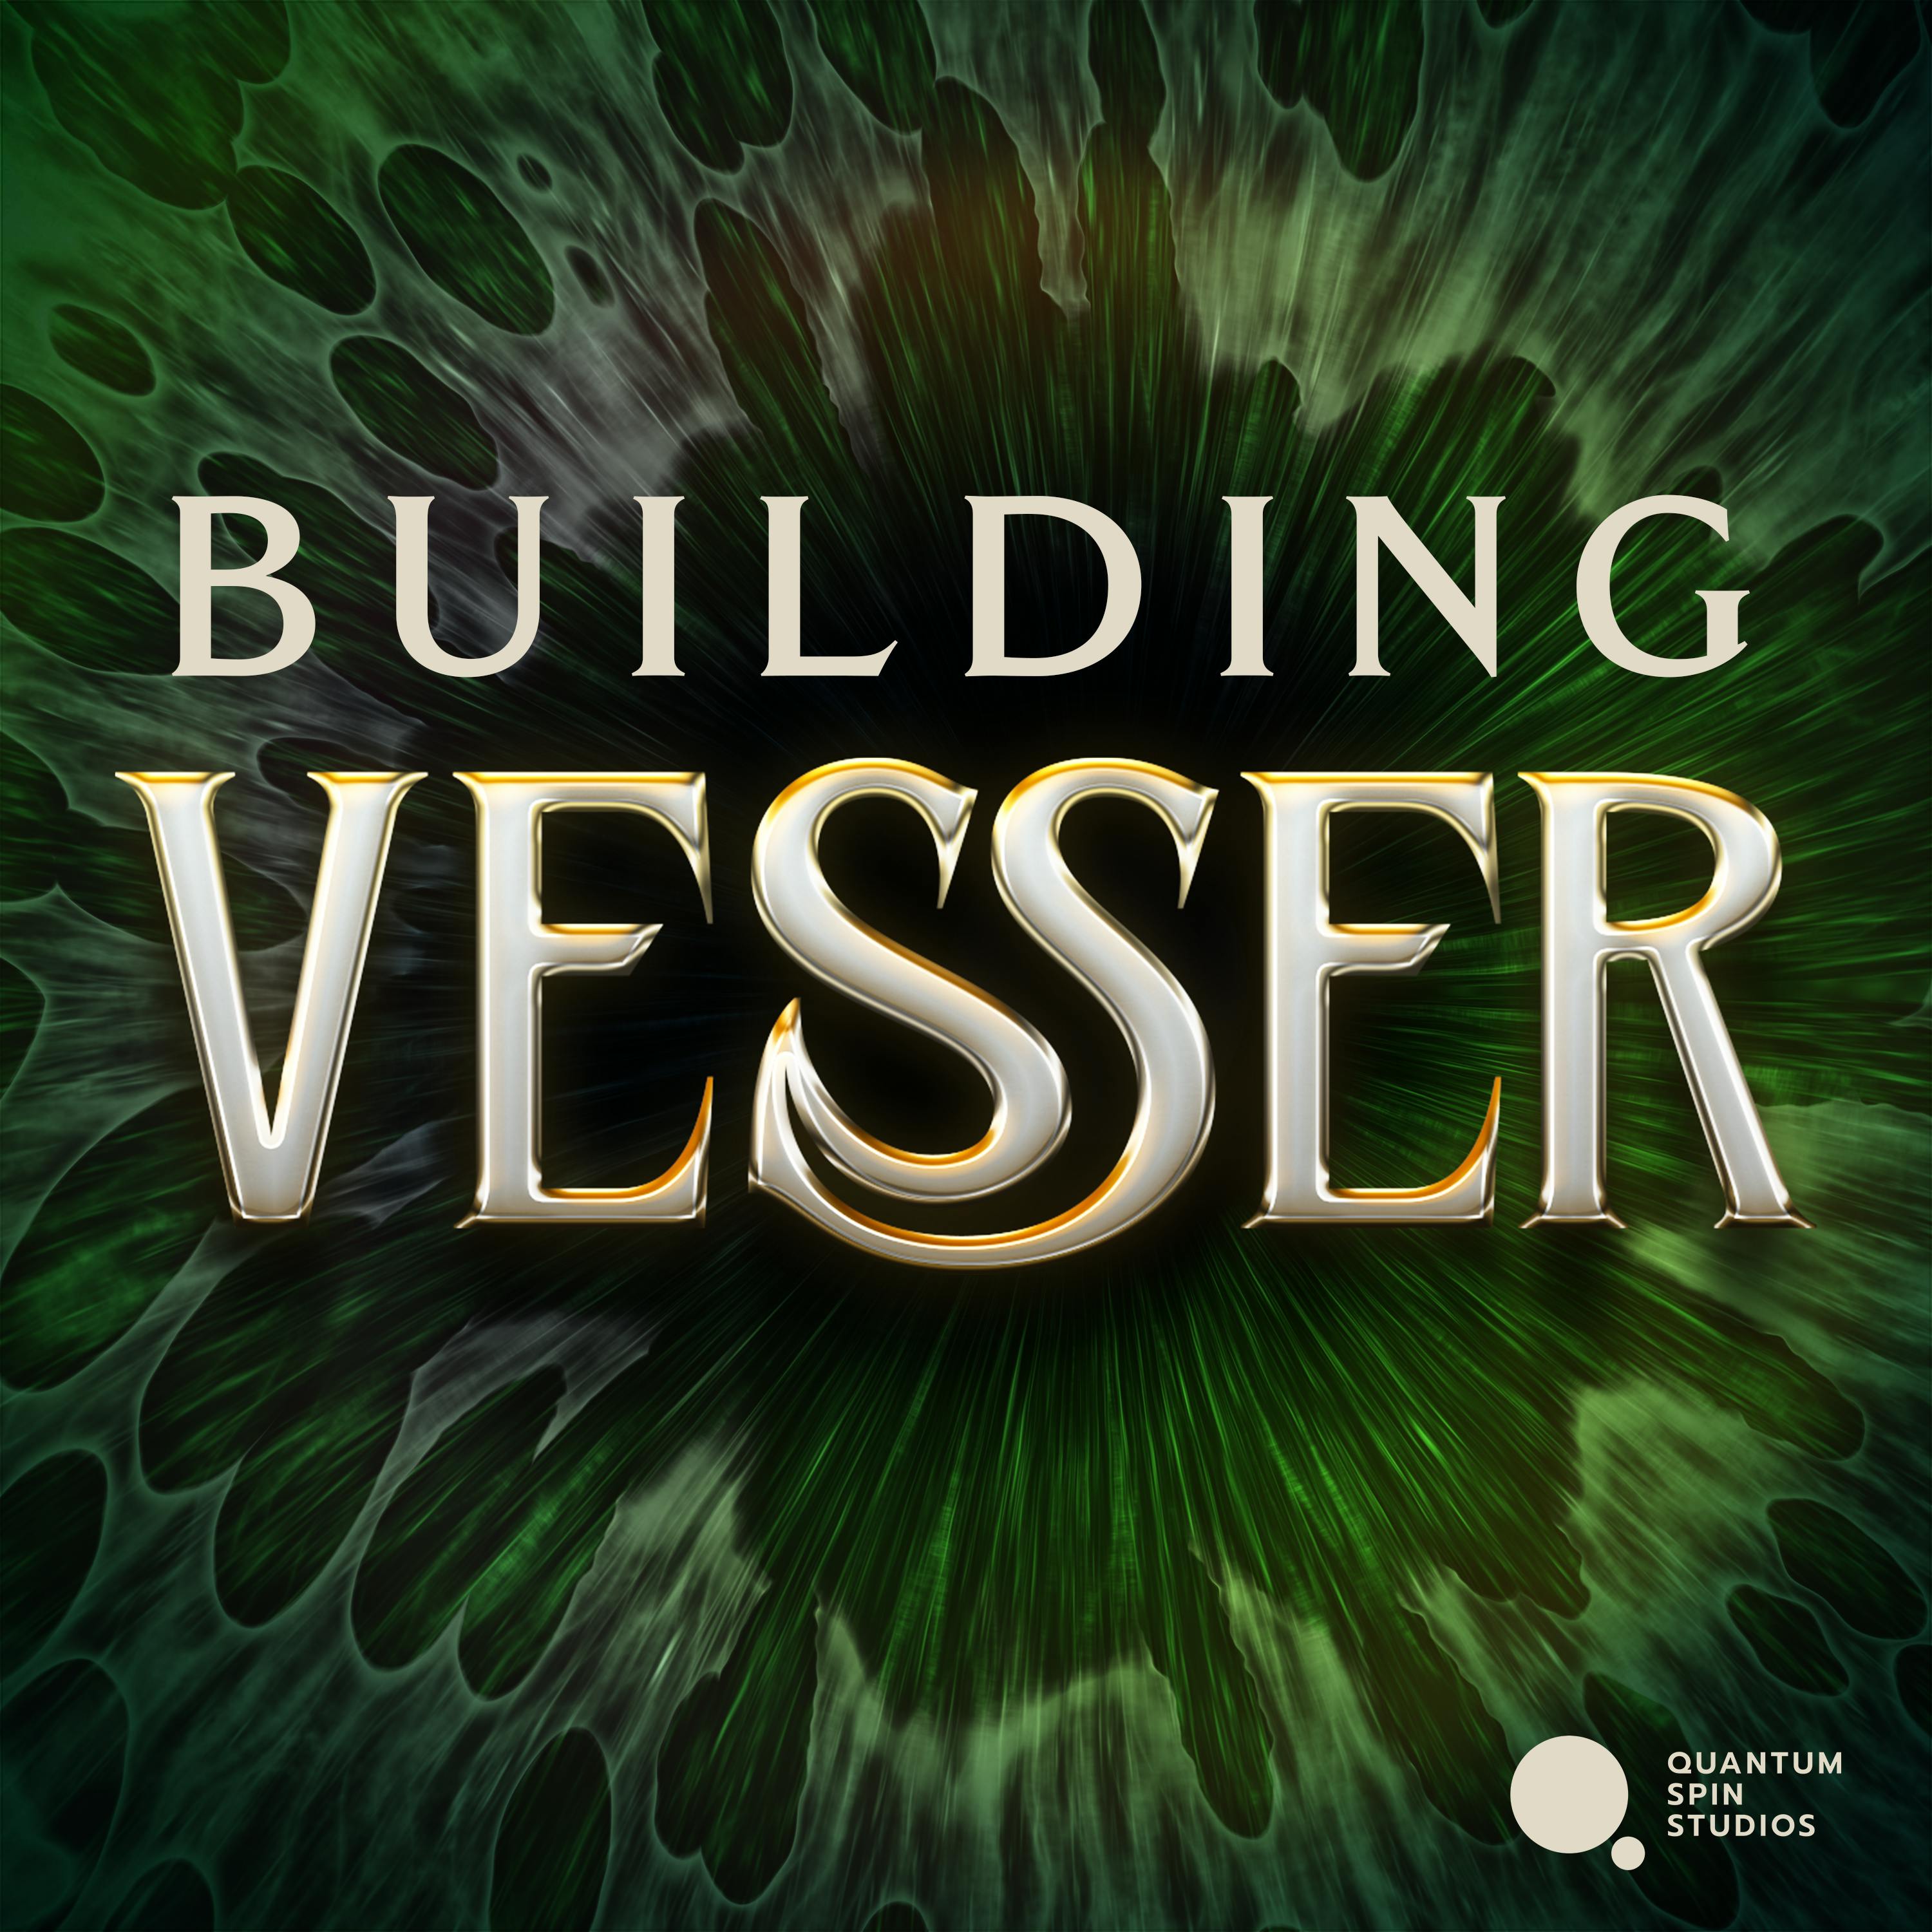 Building Vesser: The History of Vesser